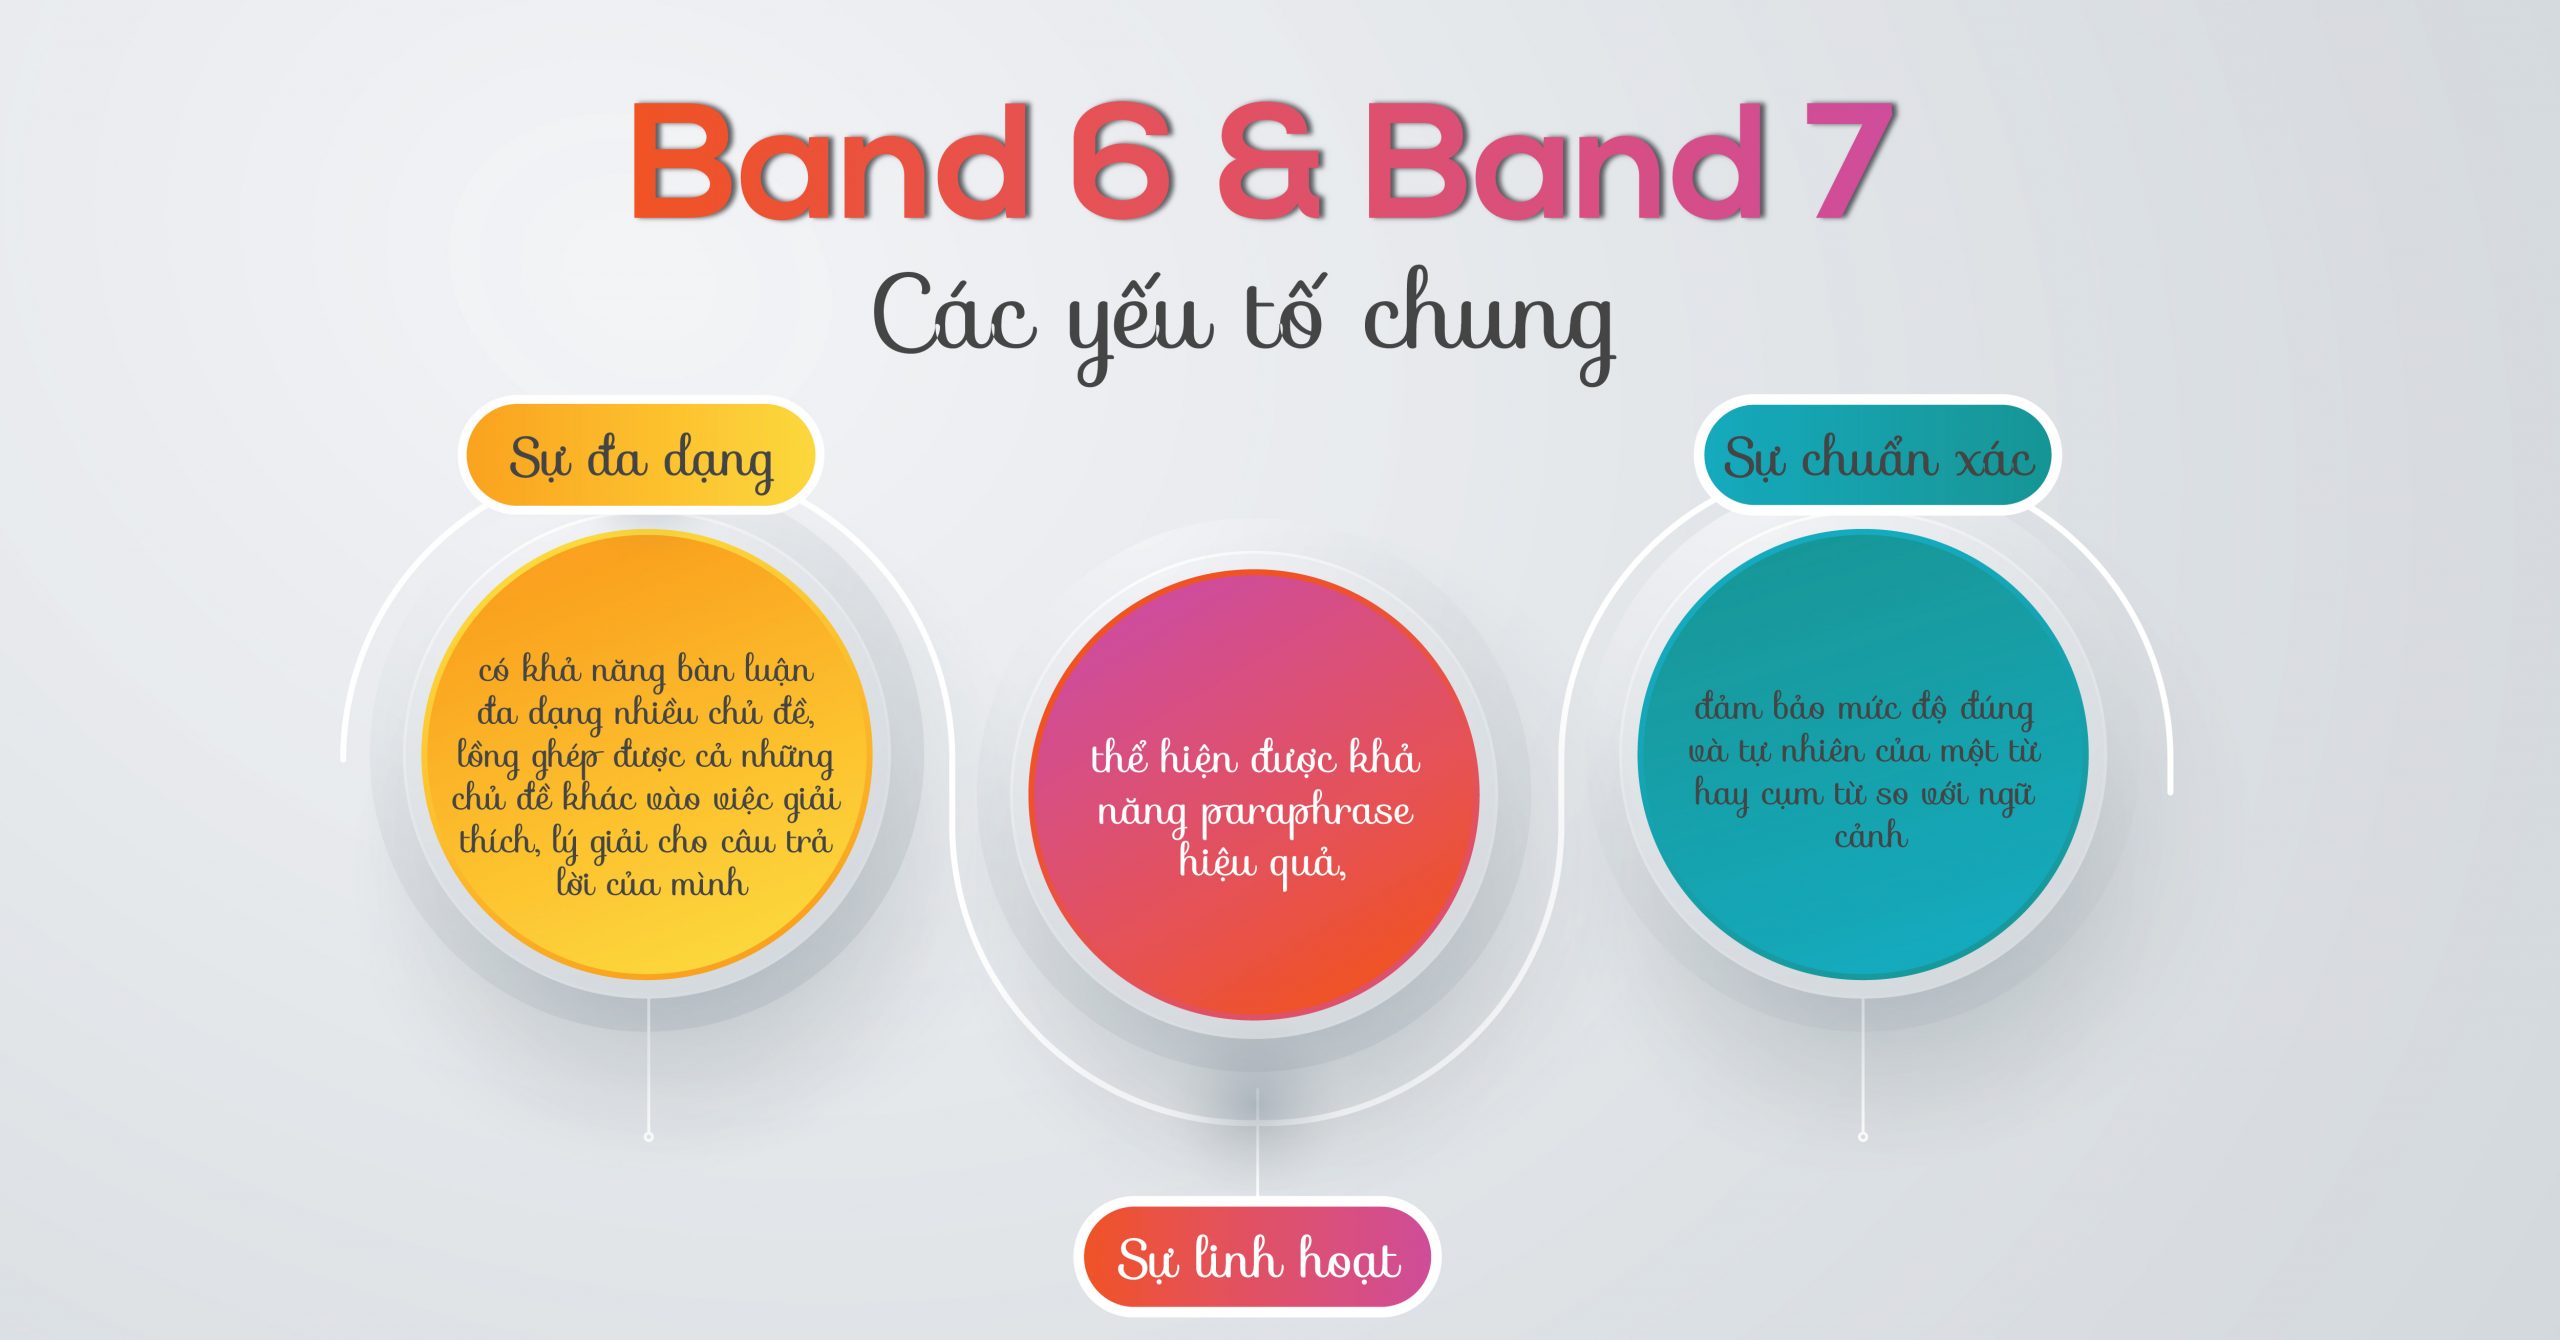 cac-yeu-to-chung-giua-band-6-band-7